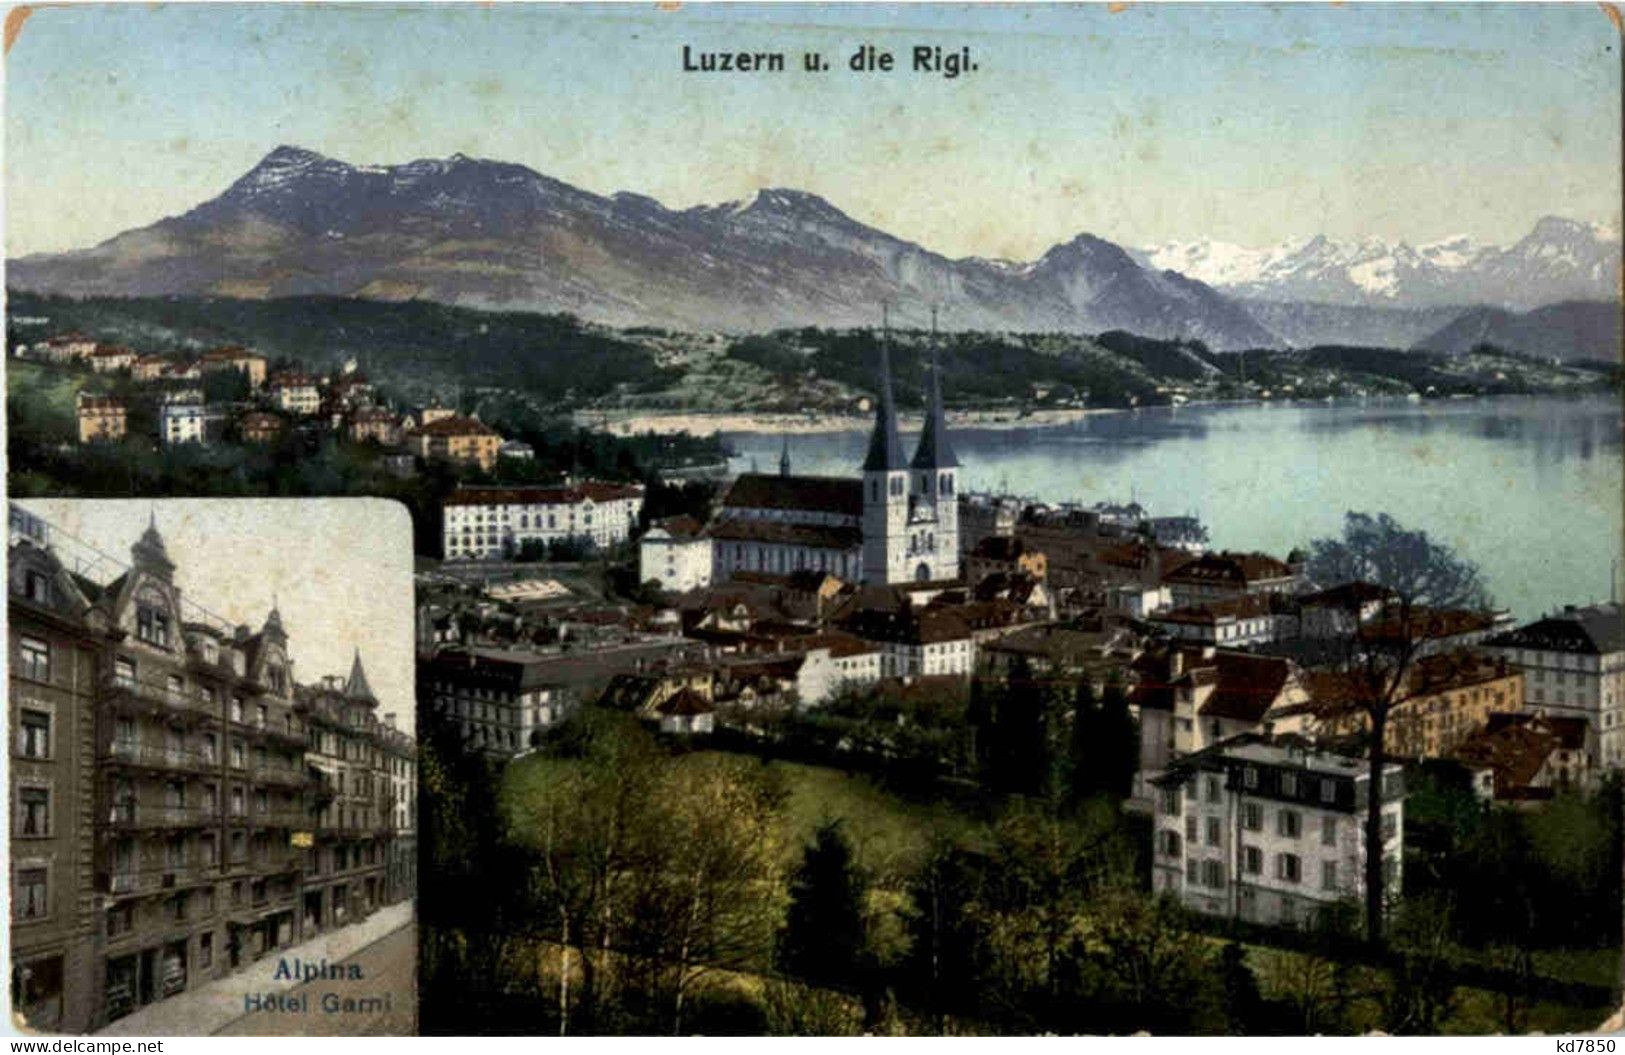 Luzern - Alpina Hotel Garni - Lucerne